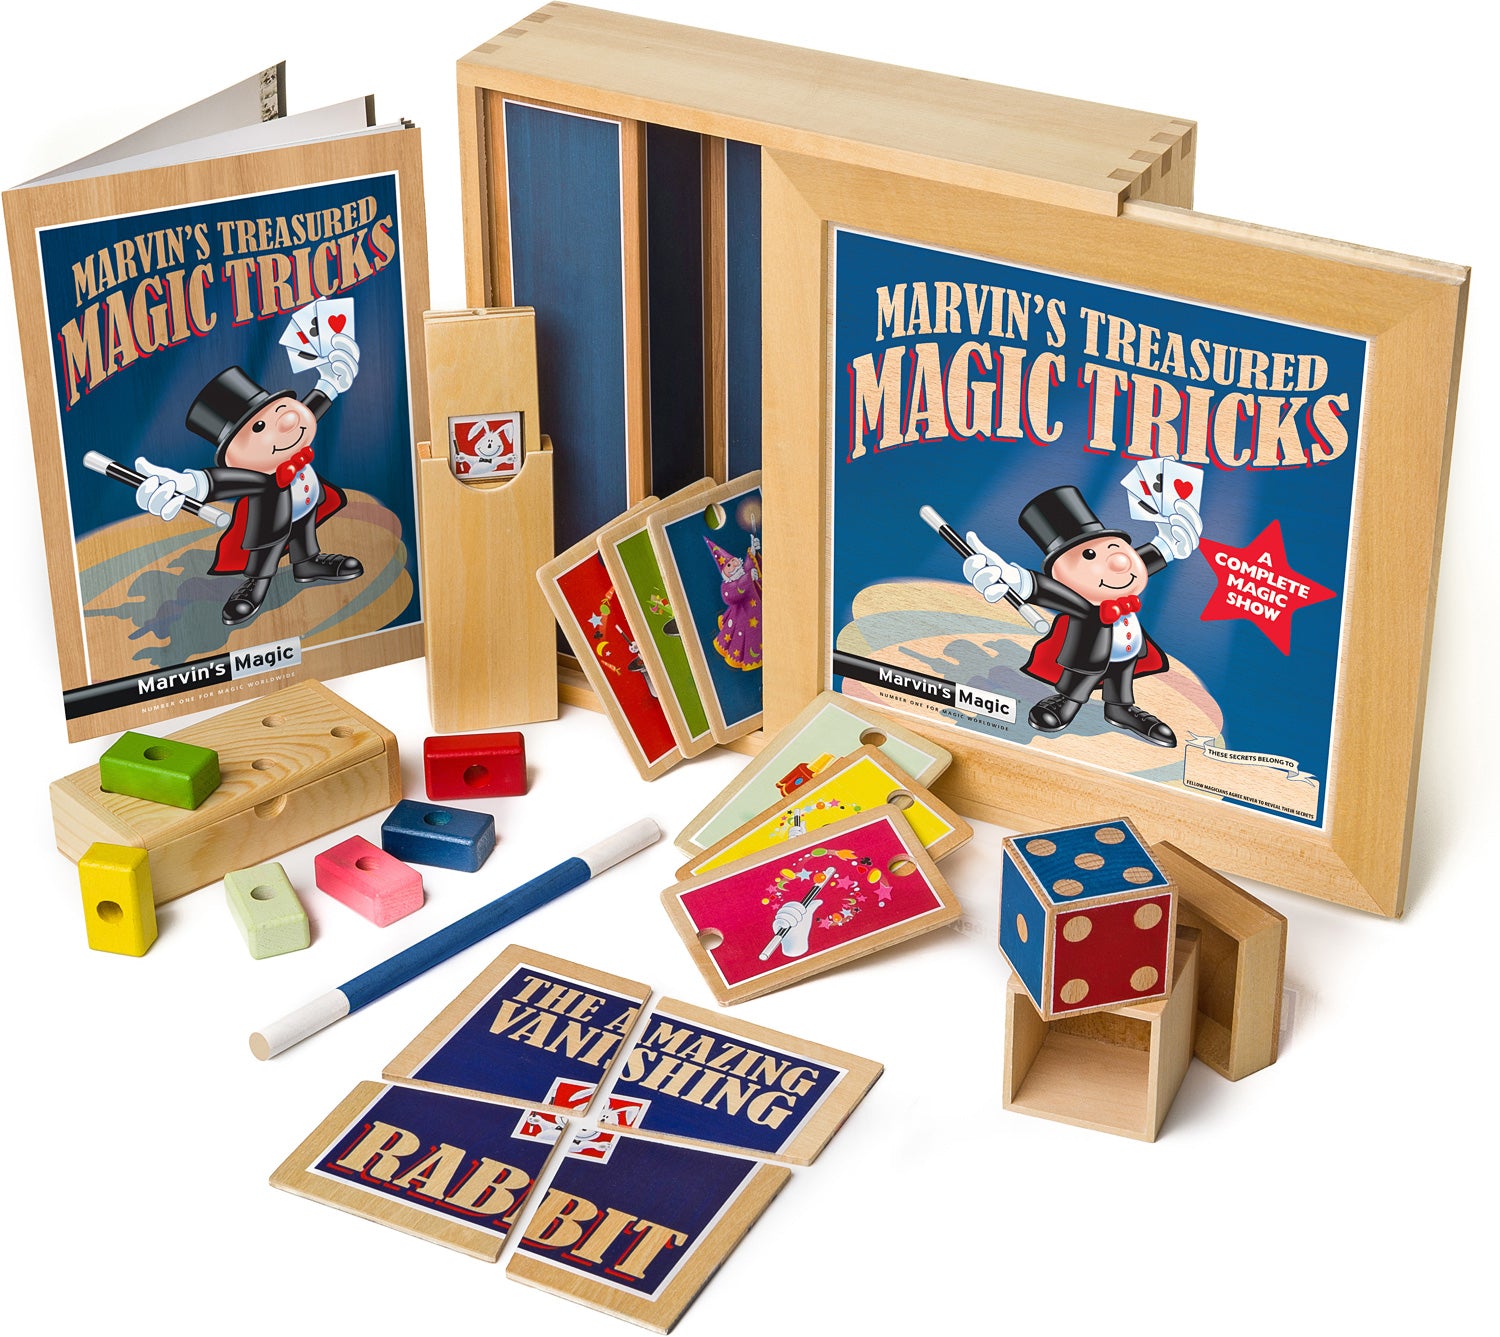 Treasured Tricks by Marvin’s Magic